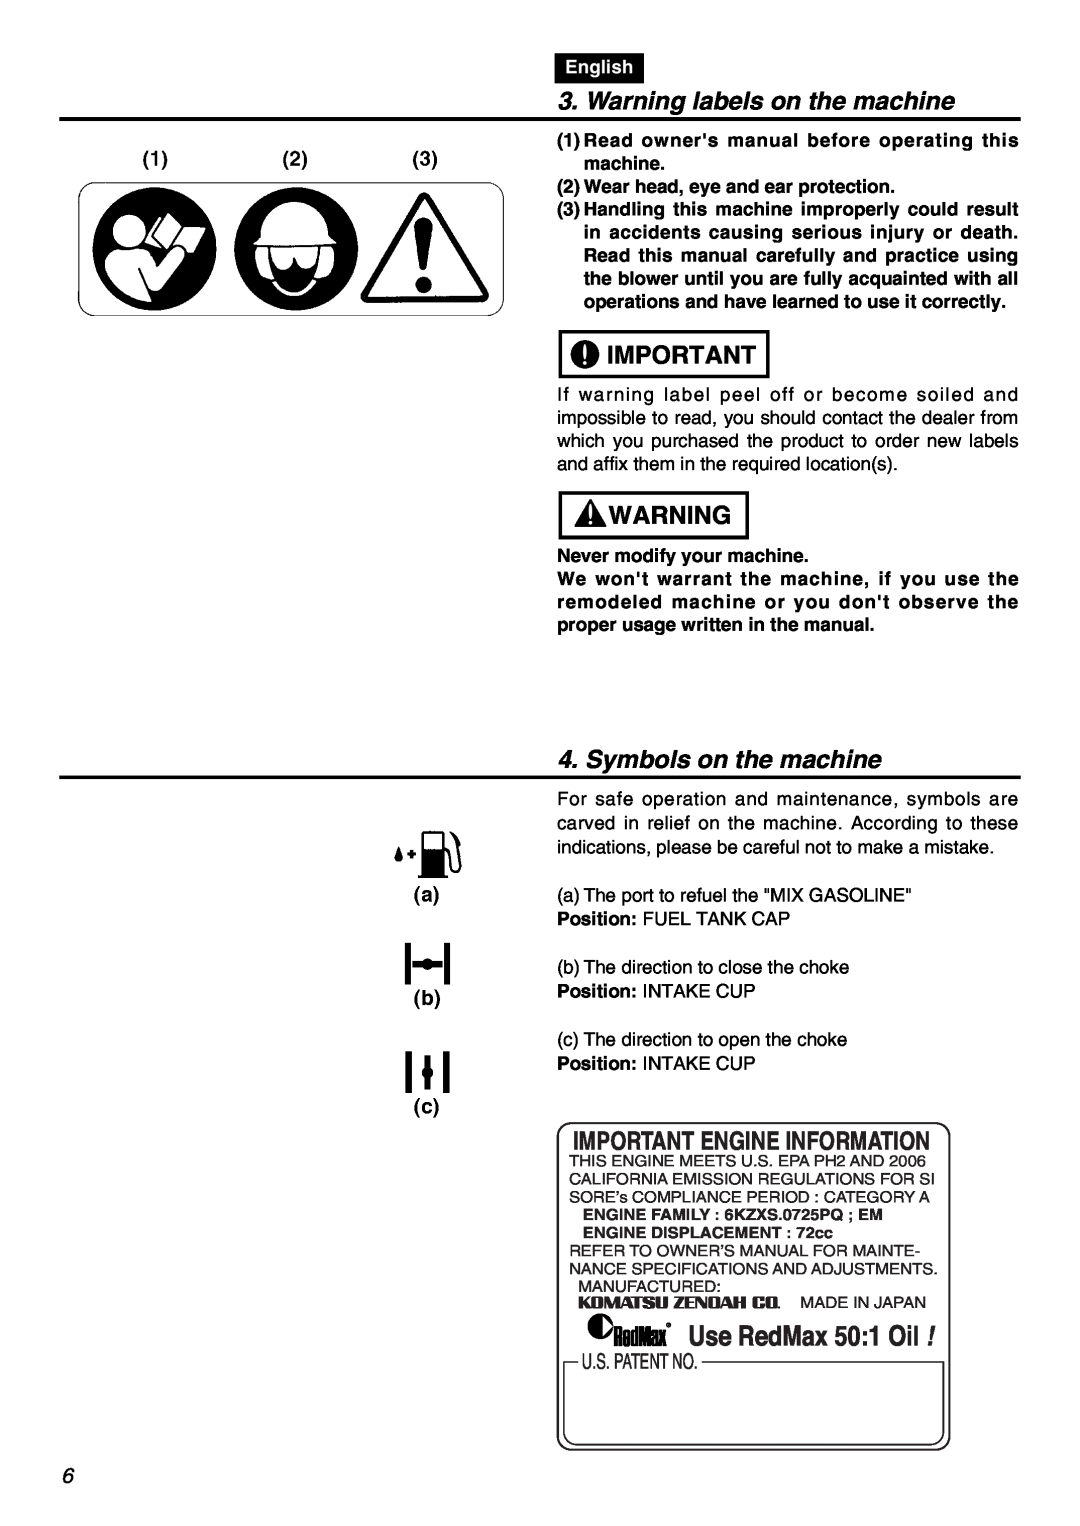 RedMax EBZ8001RH manual Warning labels on the machine, Symbols on the machine, Important Engine Information, U.S. Patent No 